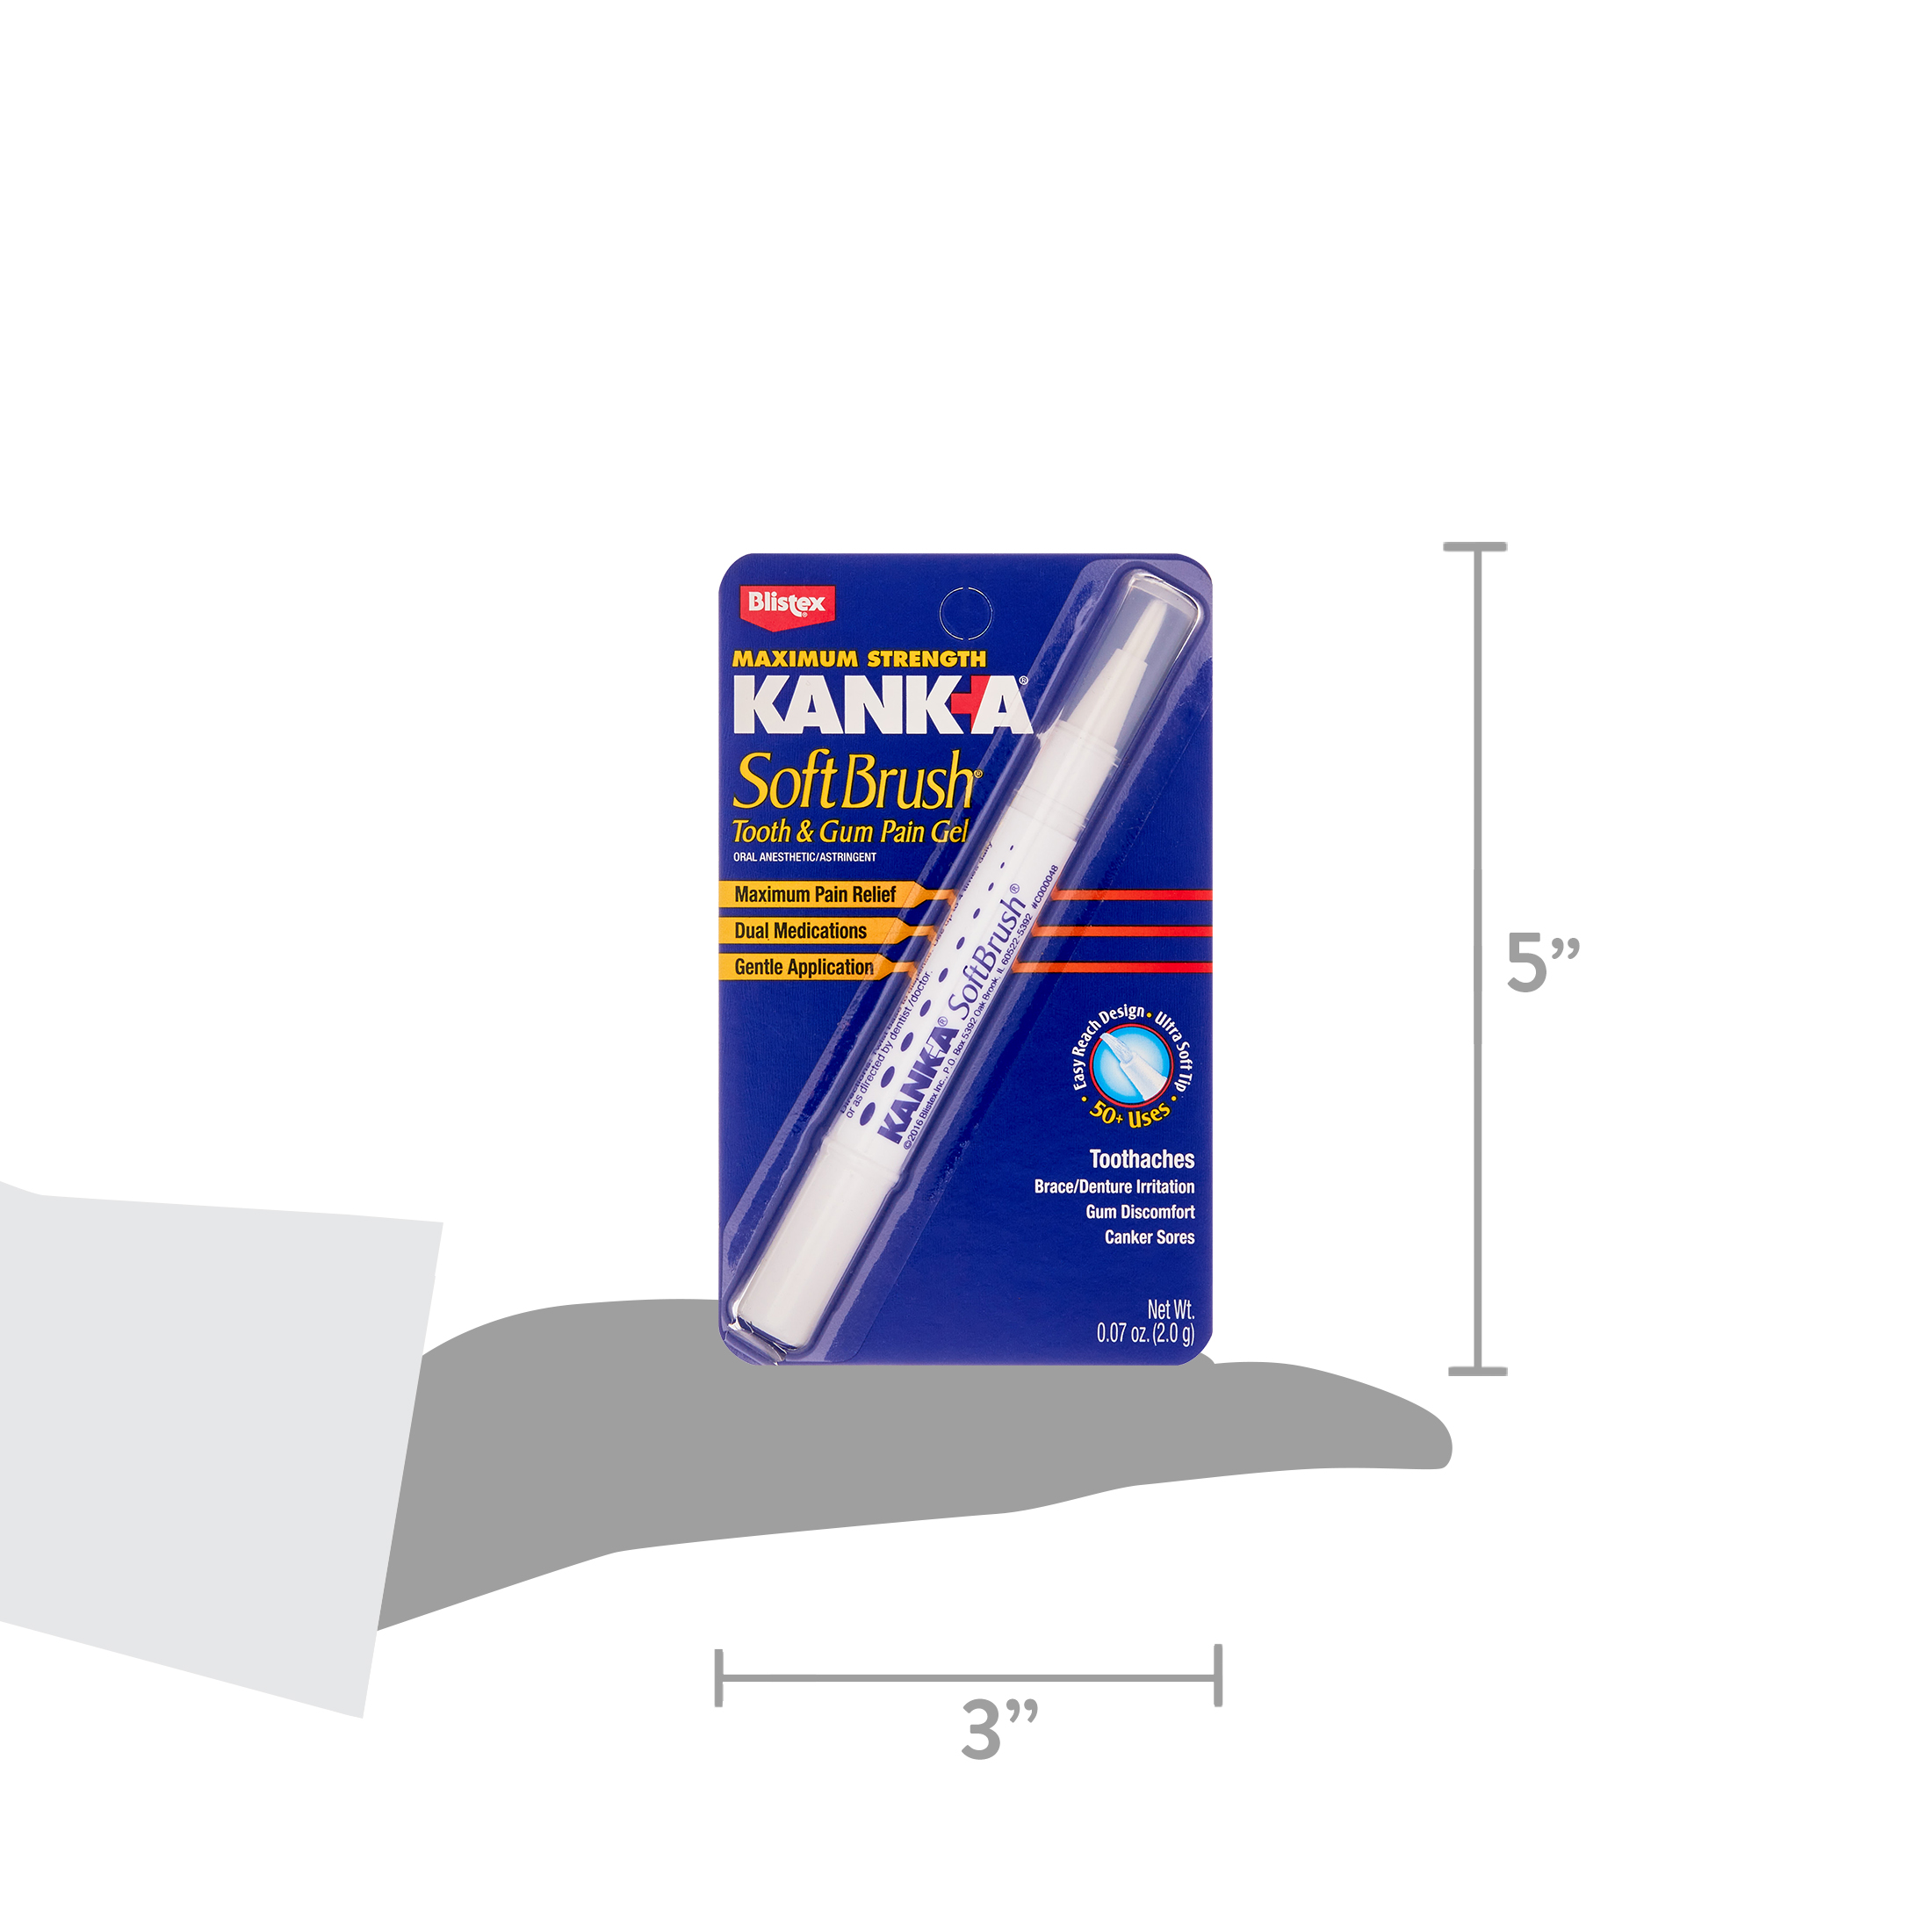 Kanka Tooth & Gum Pain Gel, Soft Brush, Professional Strenght - 0.07 oz